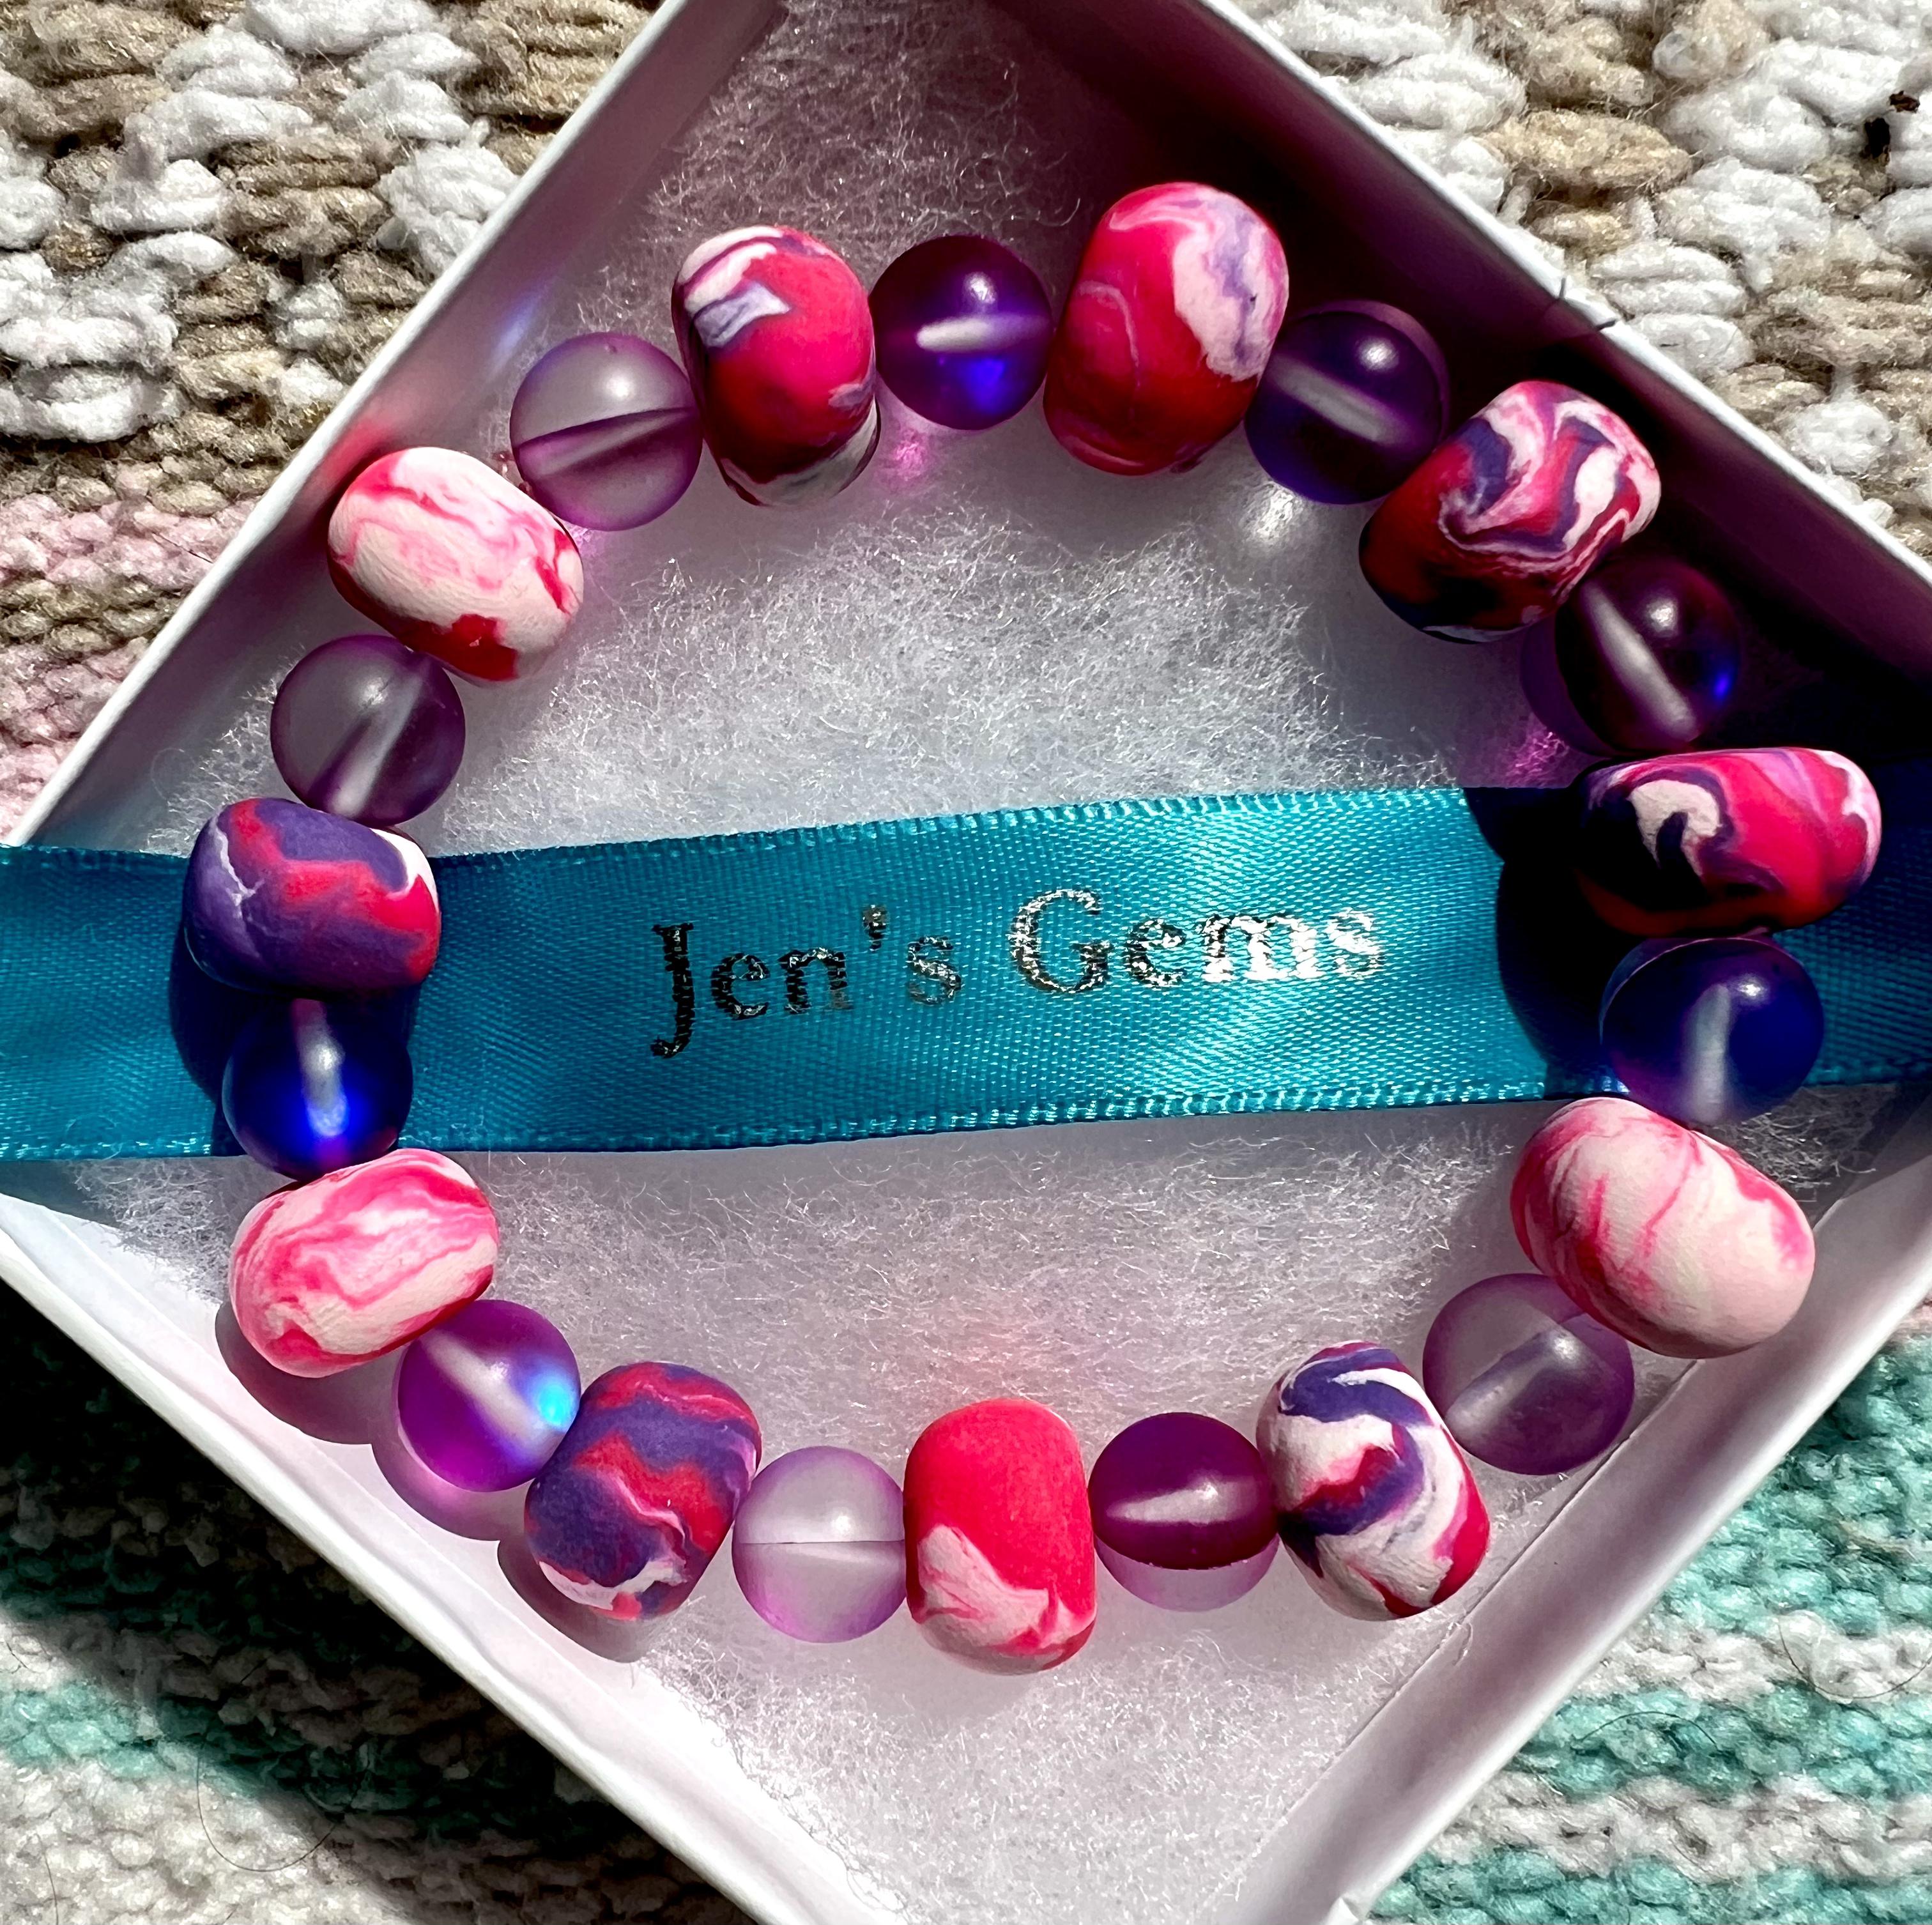 Silver-plated Jens bracelet – buy at Poison Drop online store, SKU 45652.